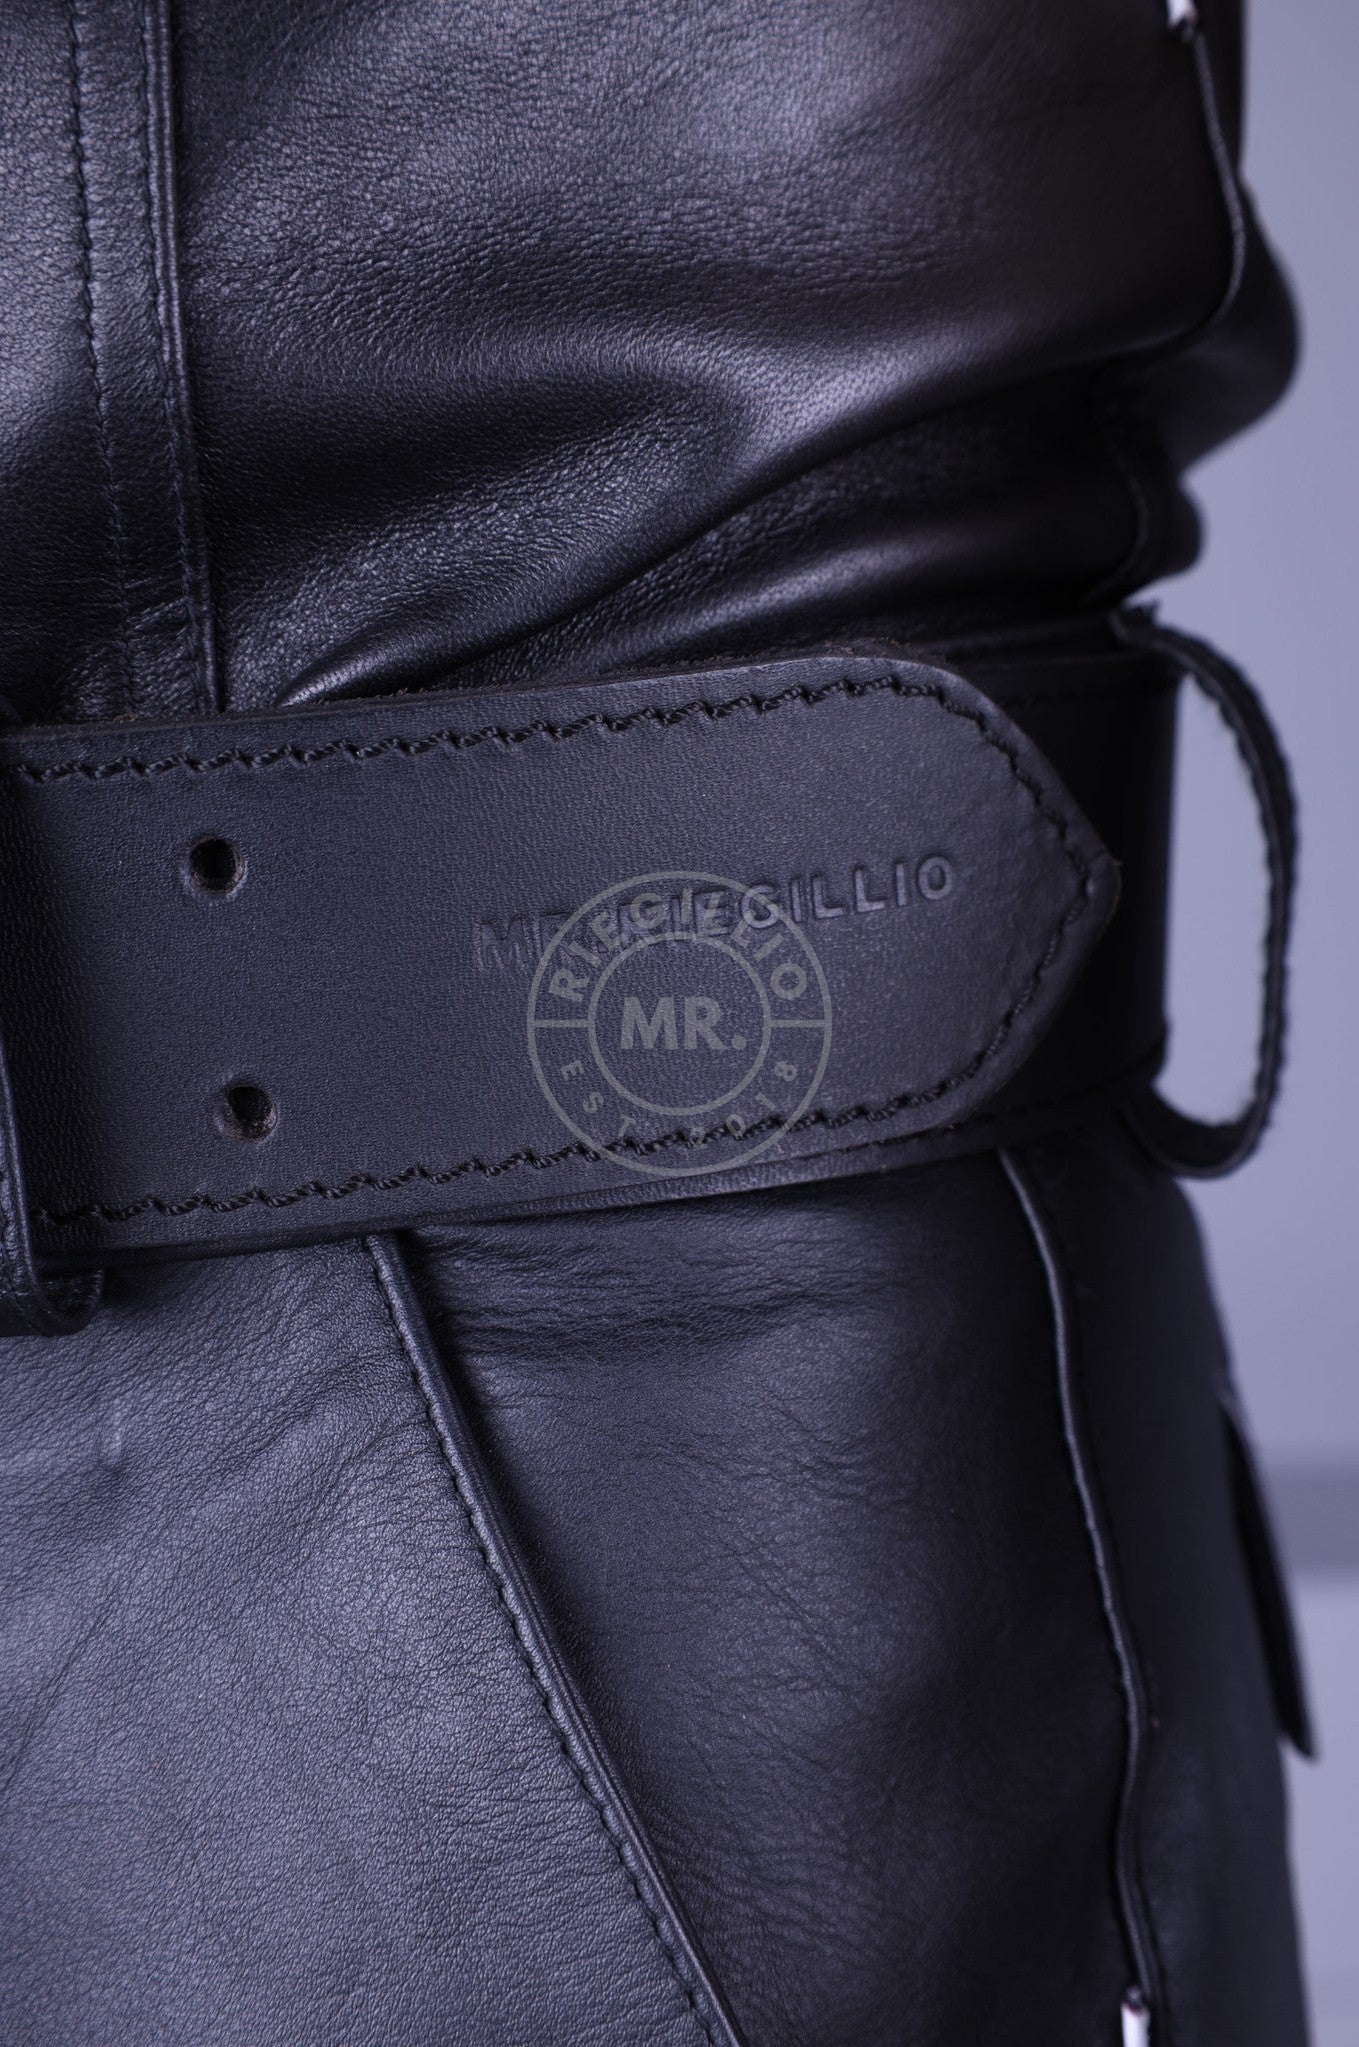 Black Leather Belt at MR. Riegillio